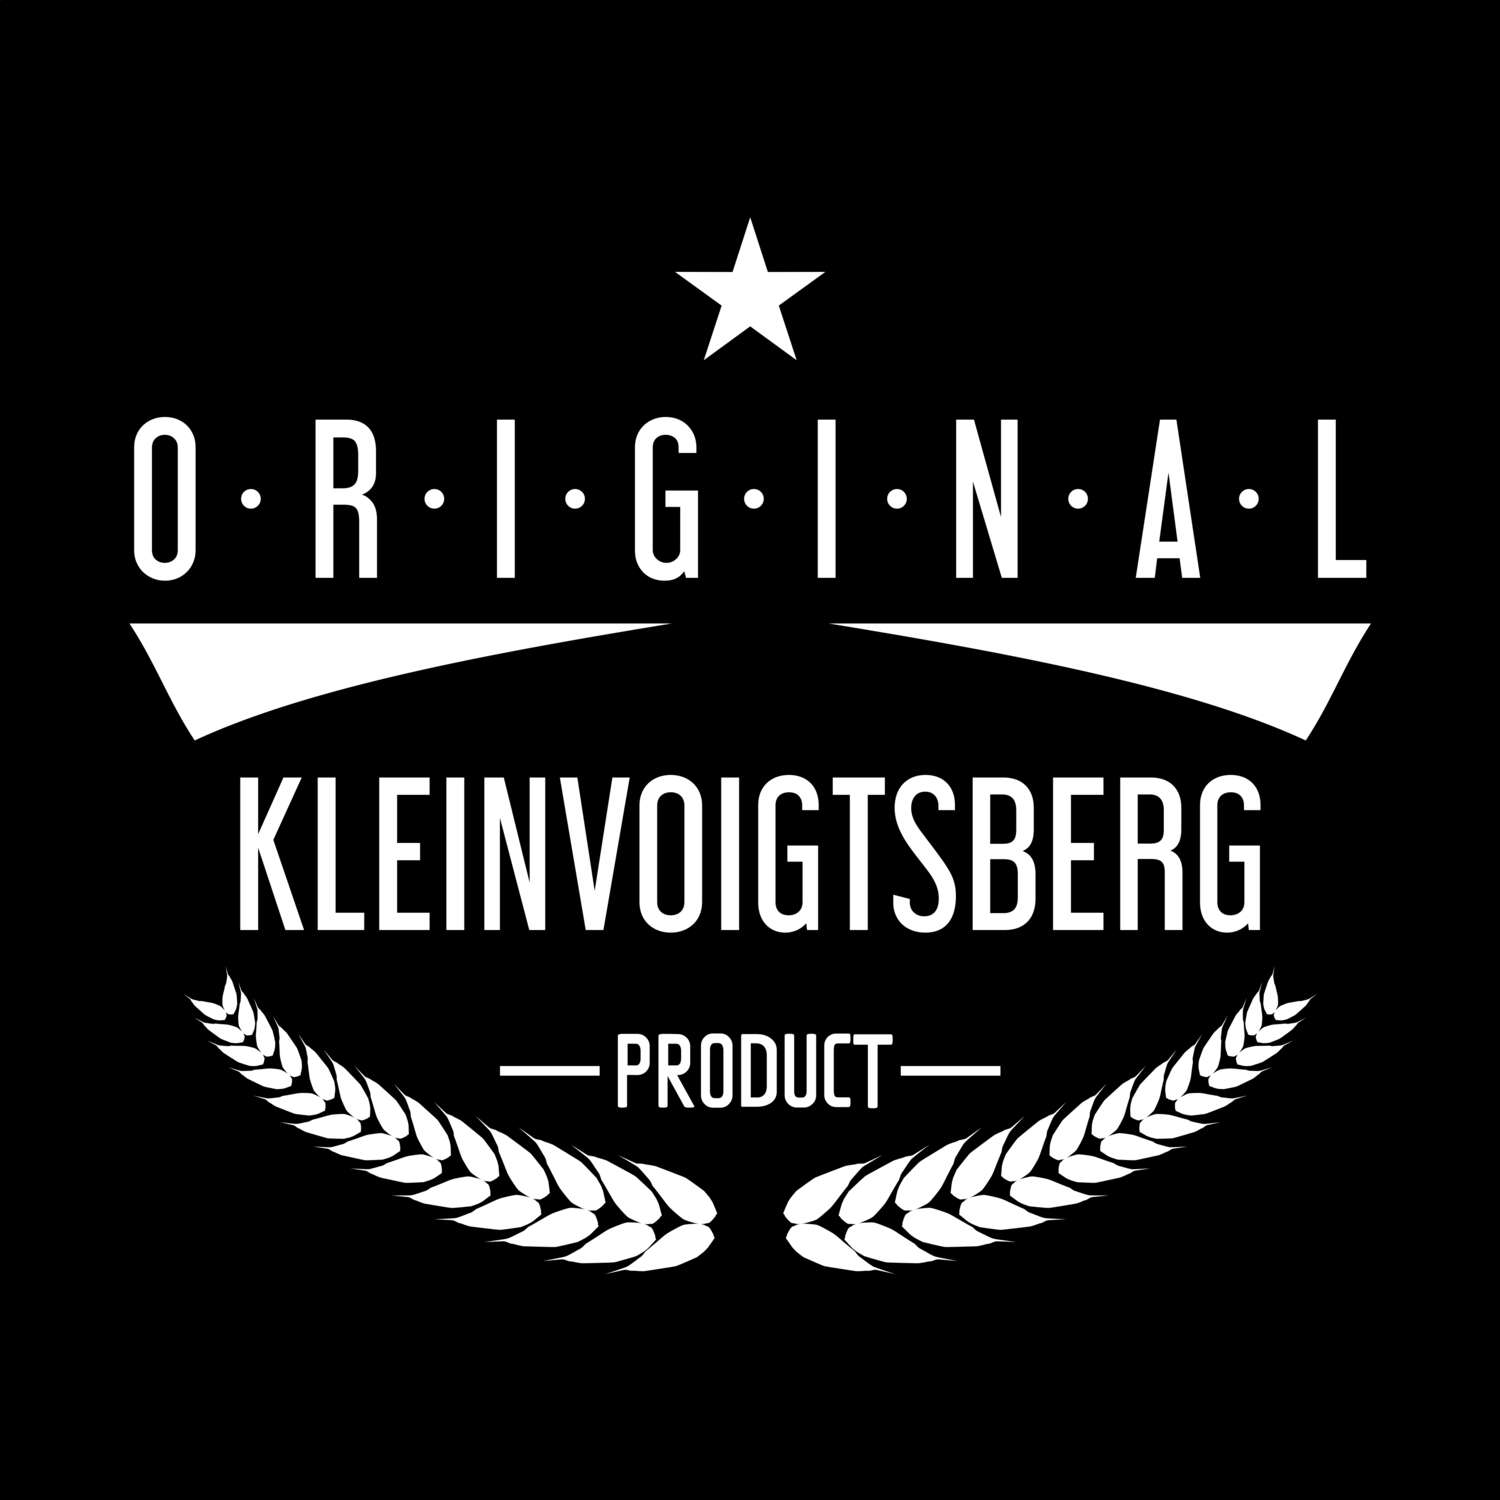 Kleinvoigtsberg T-Shirt »Original Product«